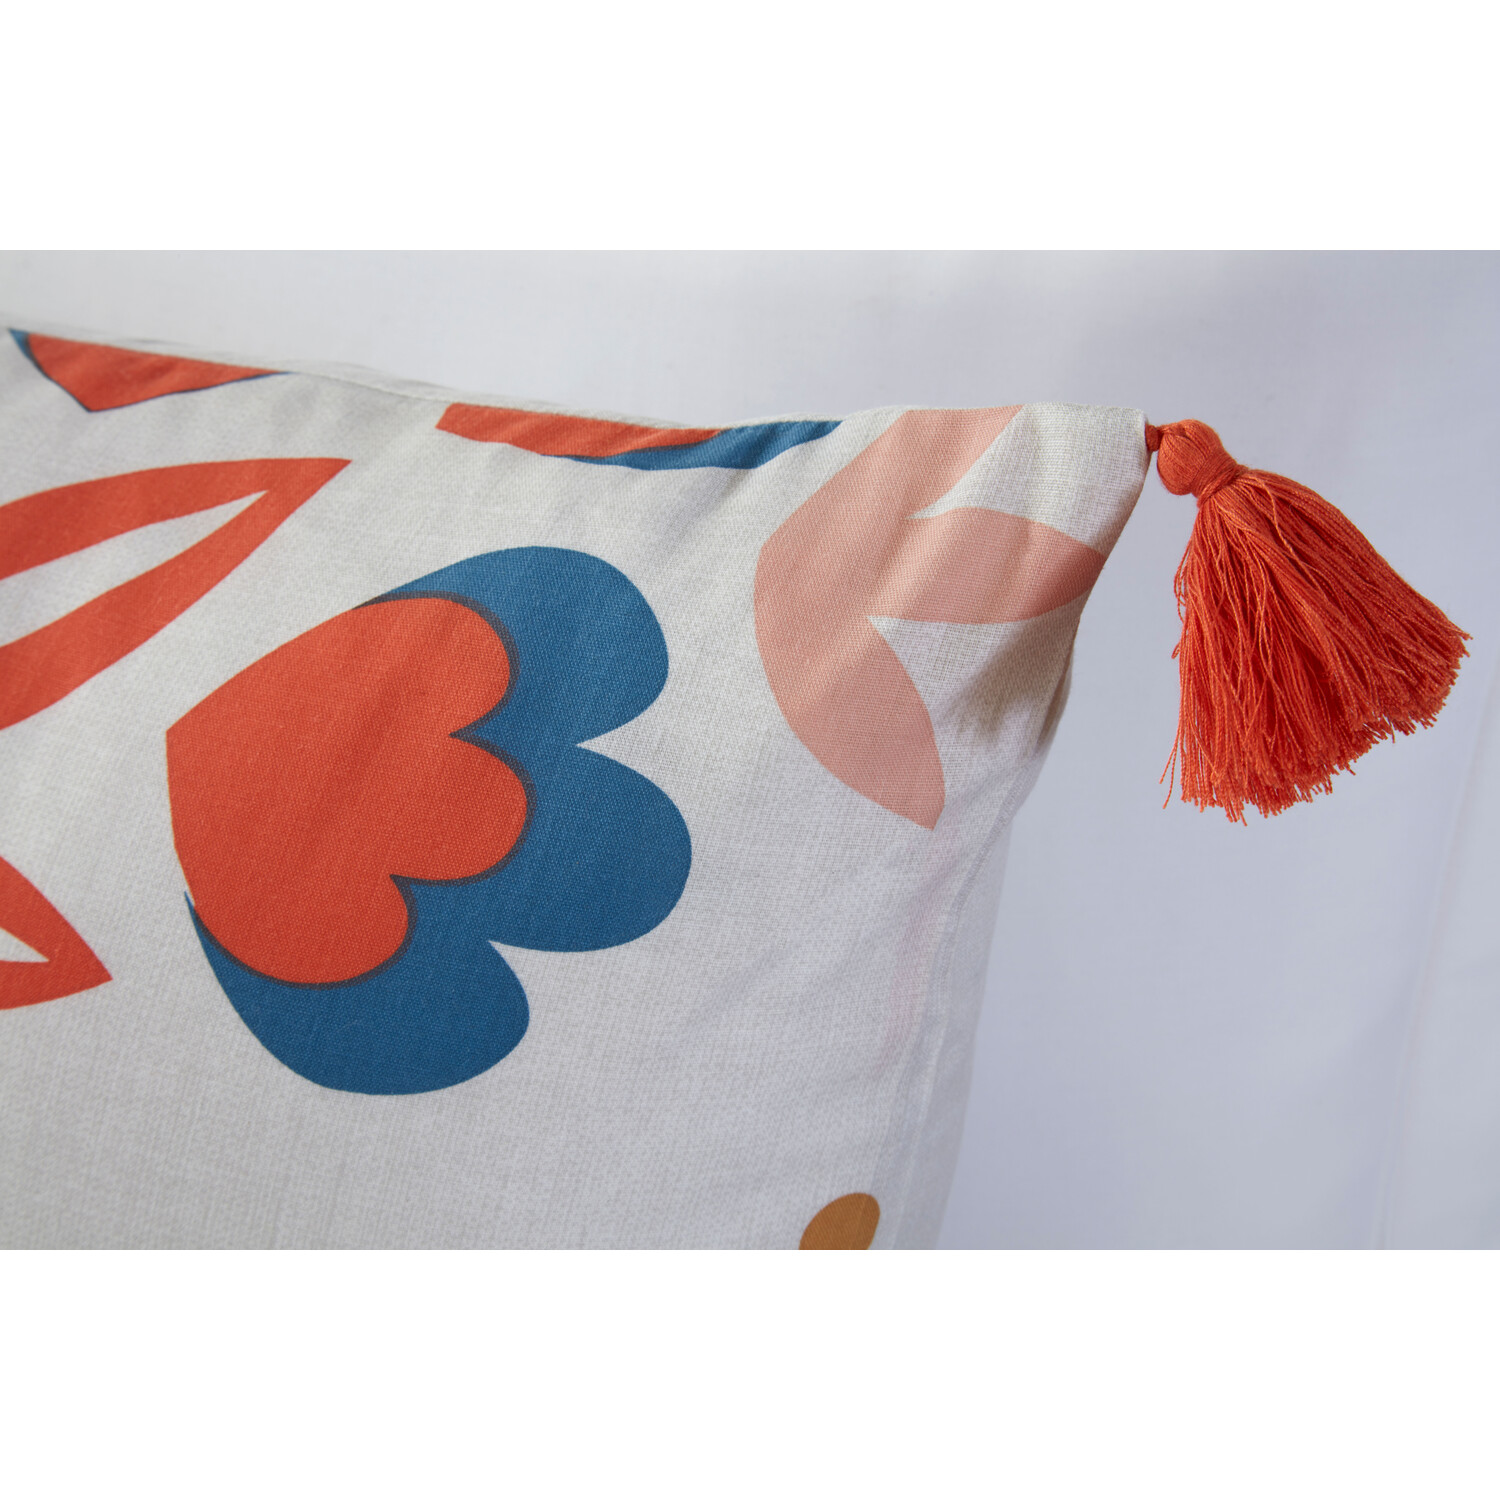 Amari Floral Duvet Cover and Pillowcase Set - King Image 6